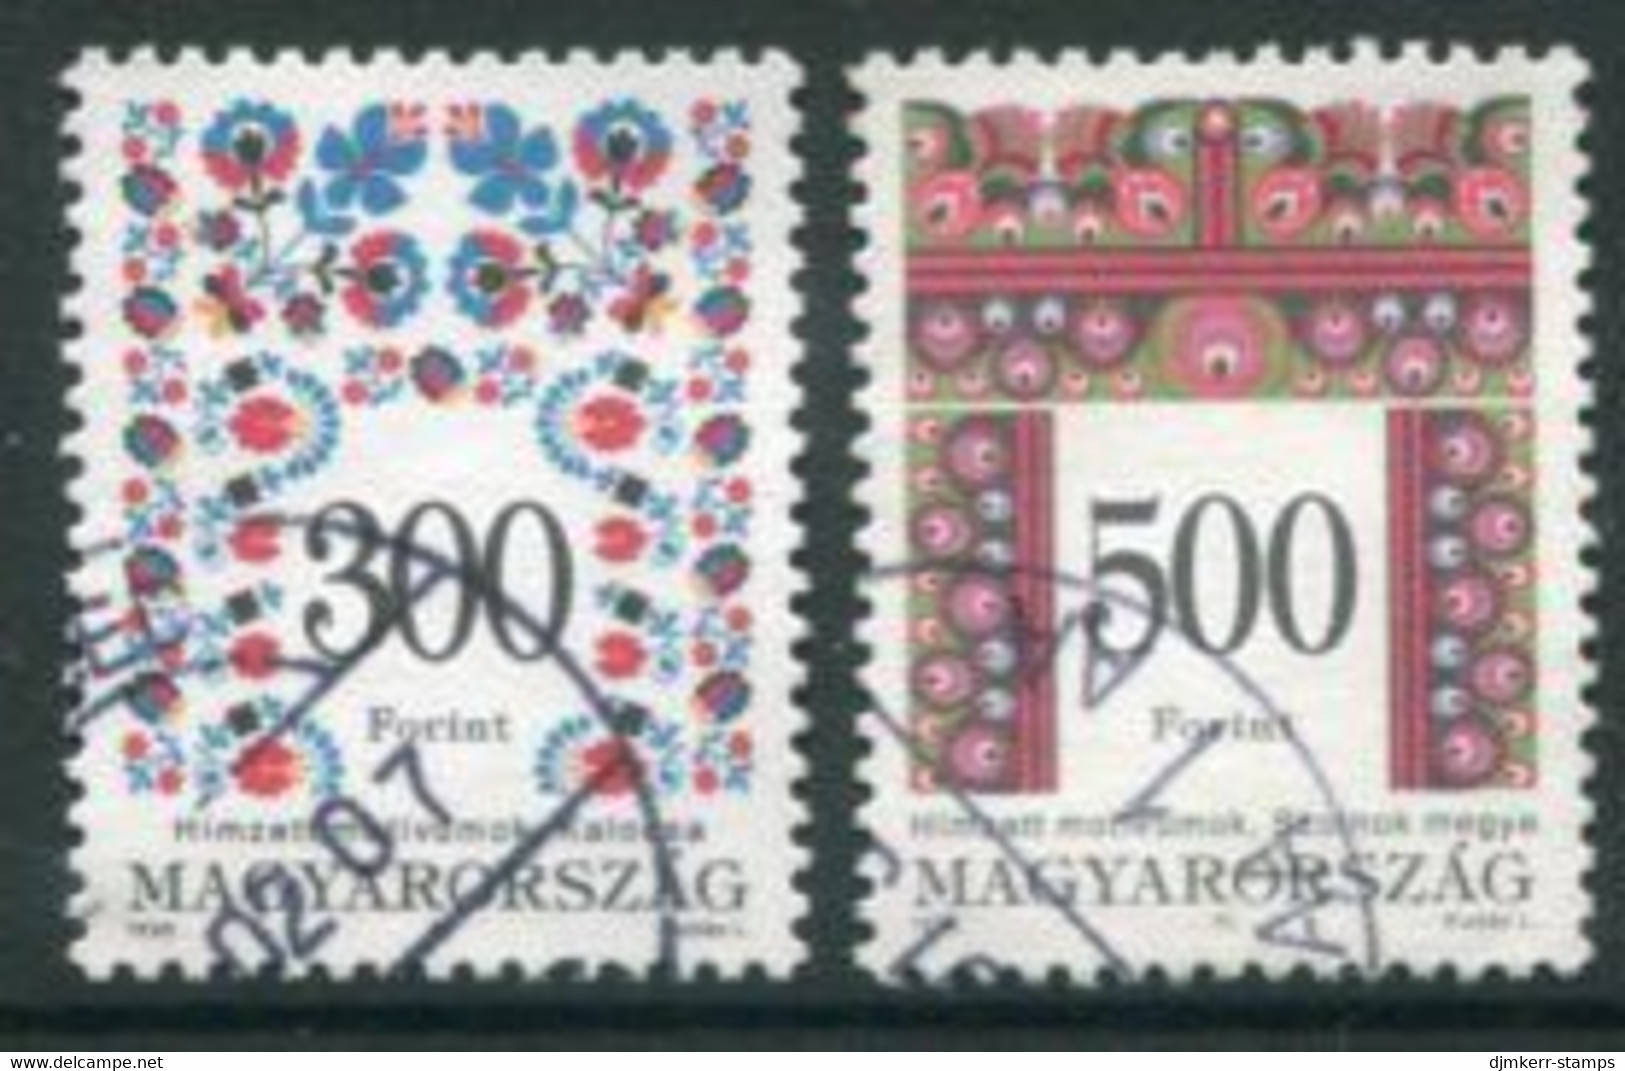 HUNGARY 1996 Folk Motif 300 And 500 Ft.  Used.  Michel 4409-10 - Usado